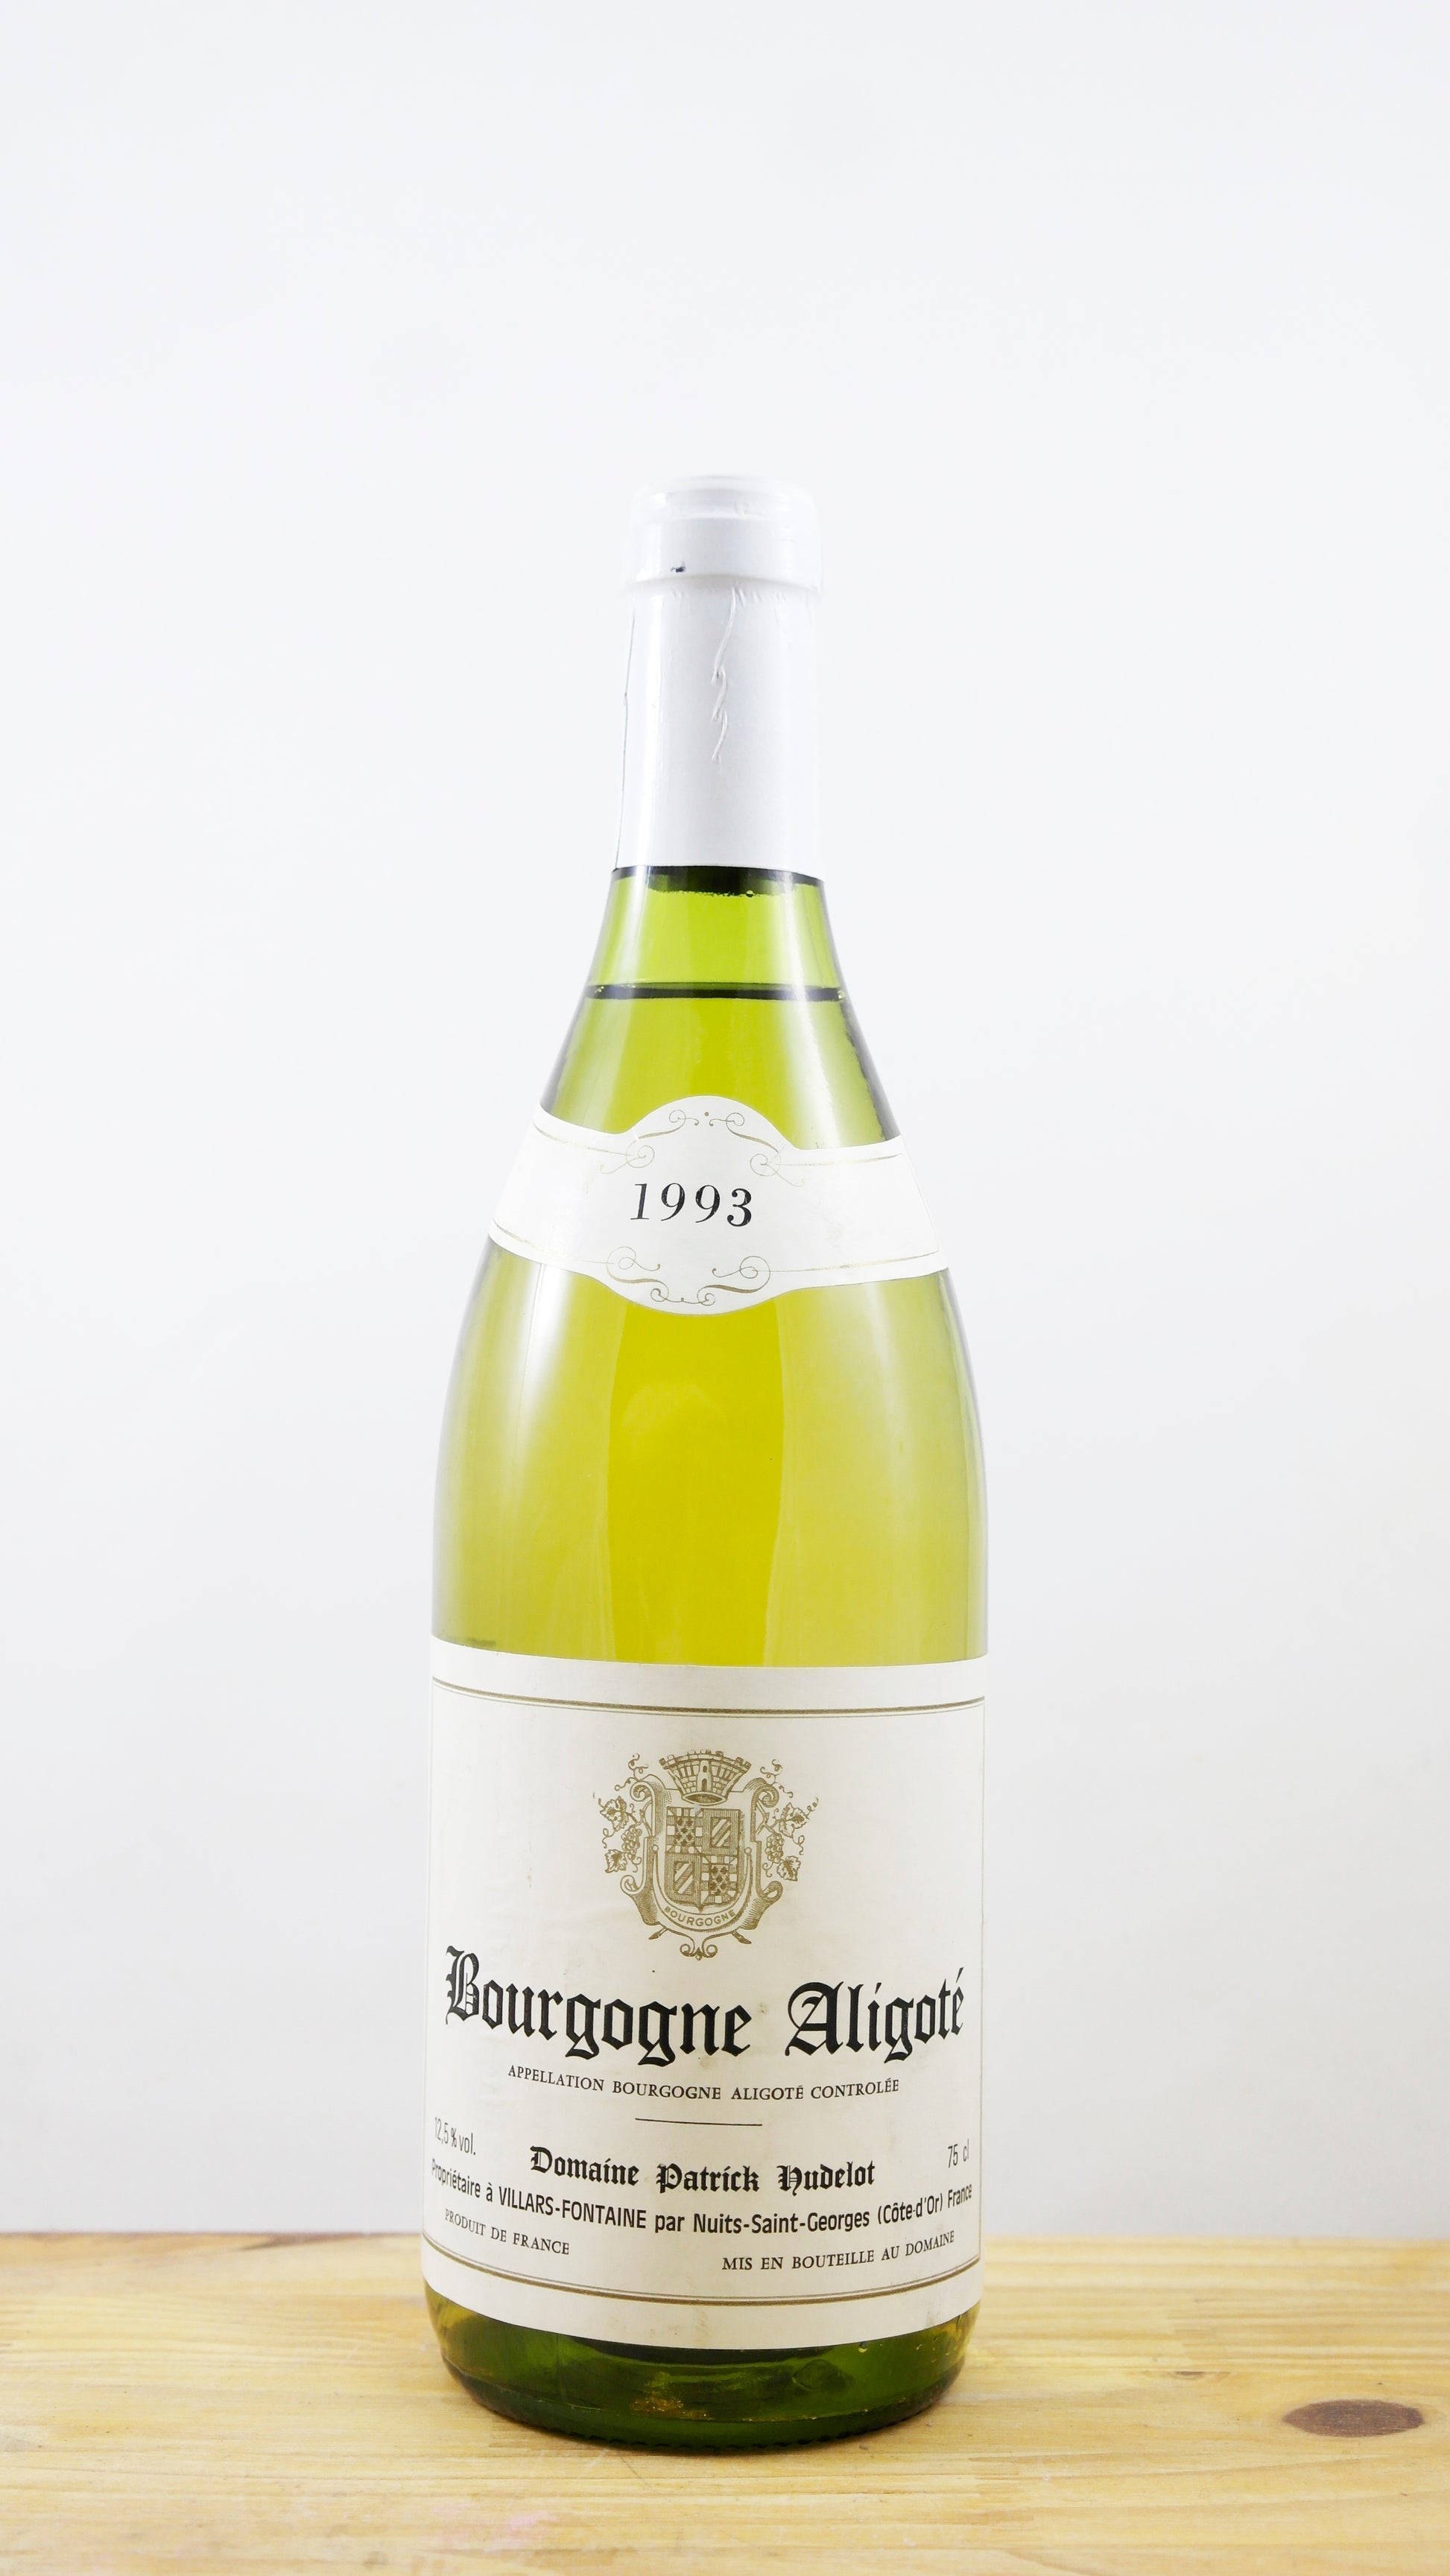 Vin Année 1993 Bourgogne Aligoté Domaine Patrick Hudelot